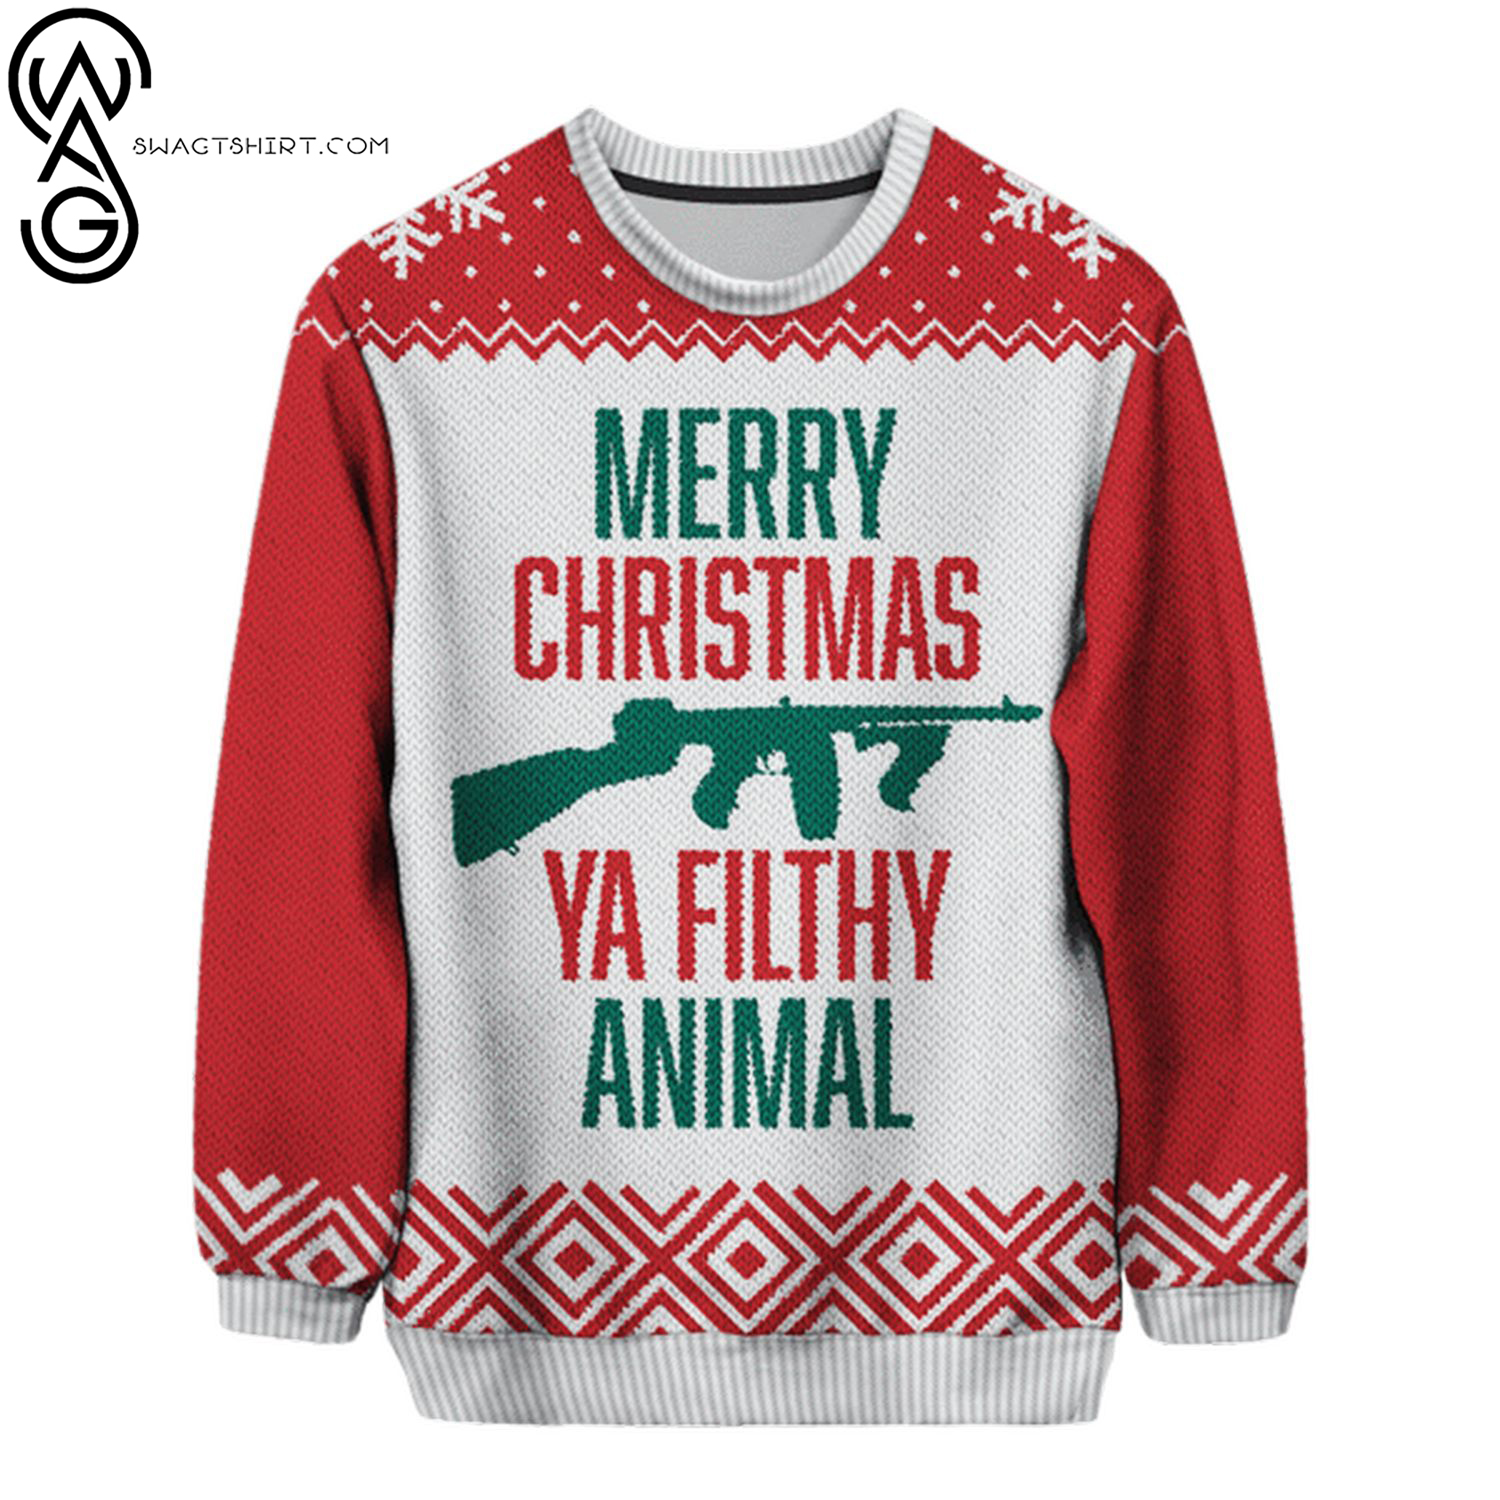 Merry christmas you filthy animal full printing ugly christmas sweater